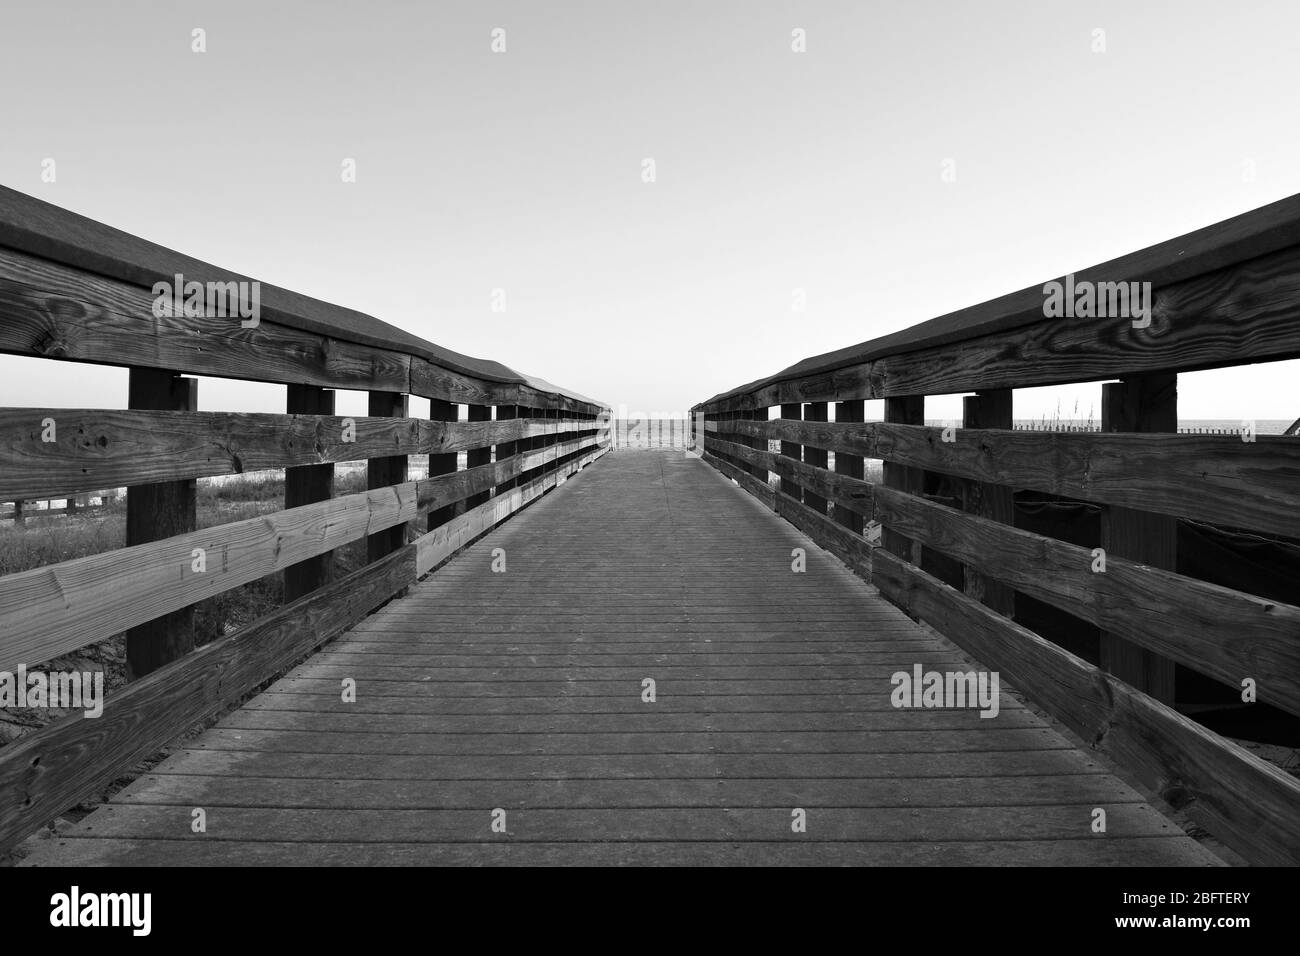 Walkway to beach in black and white Stock Photo